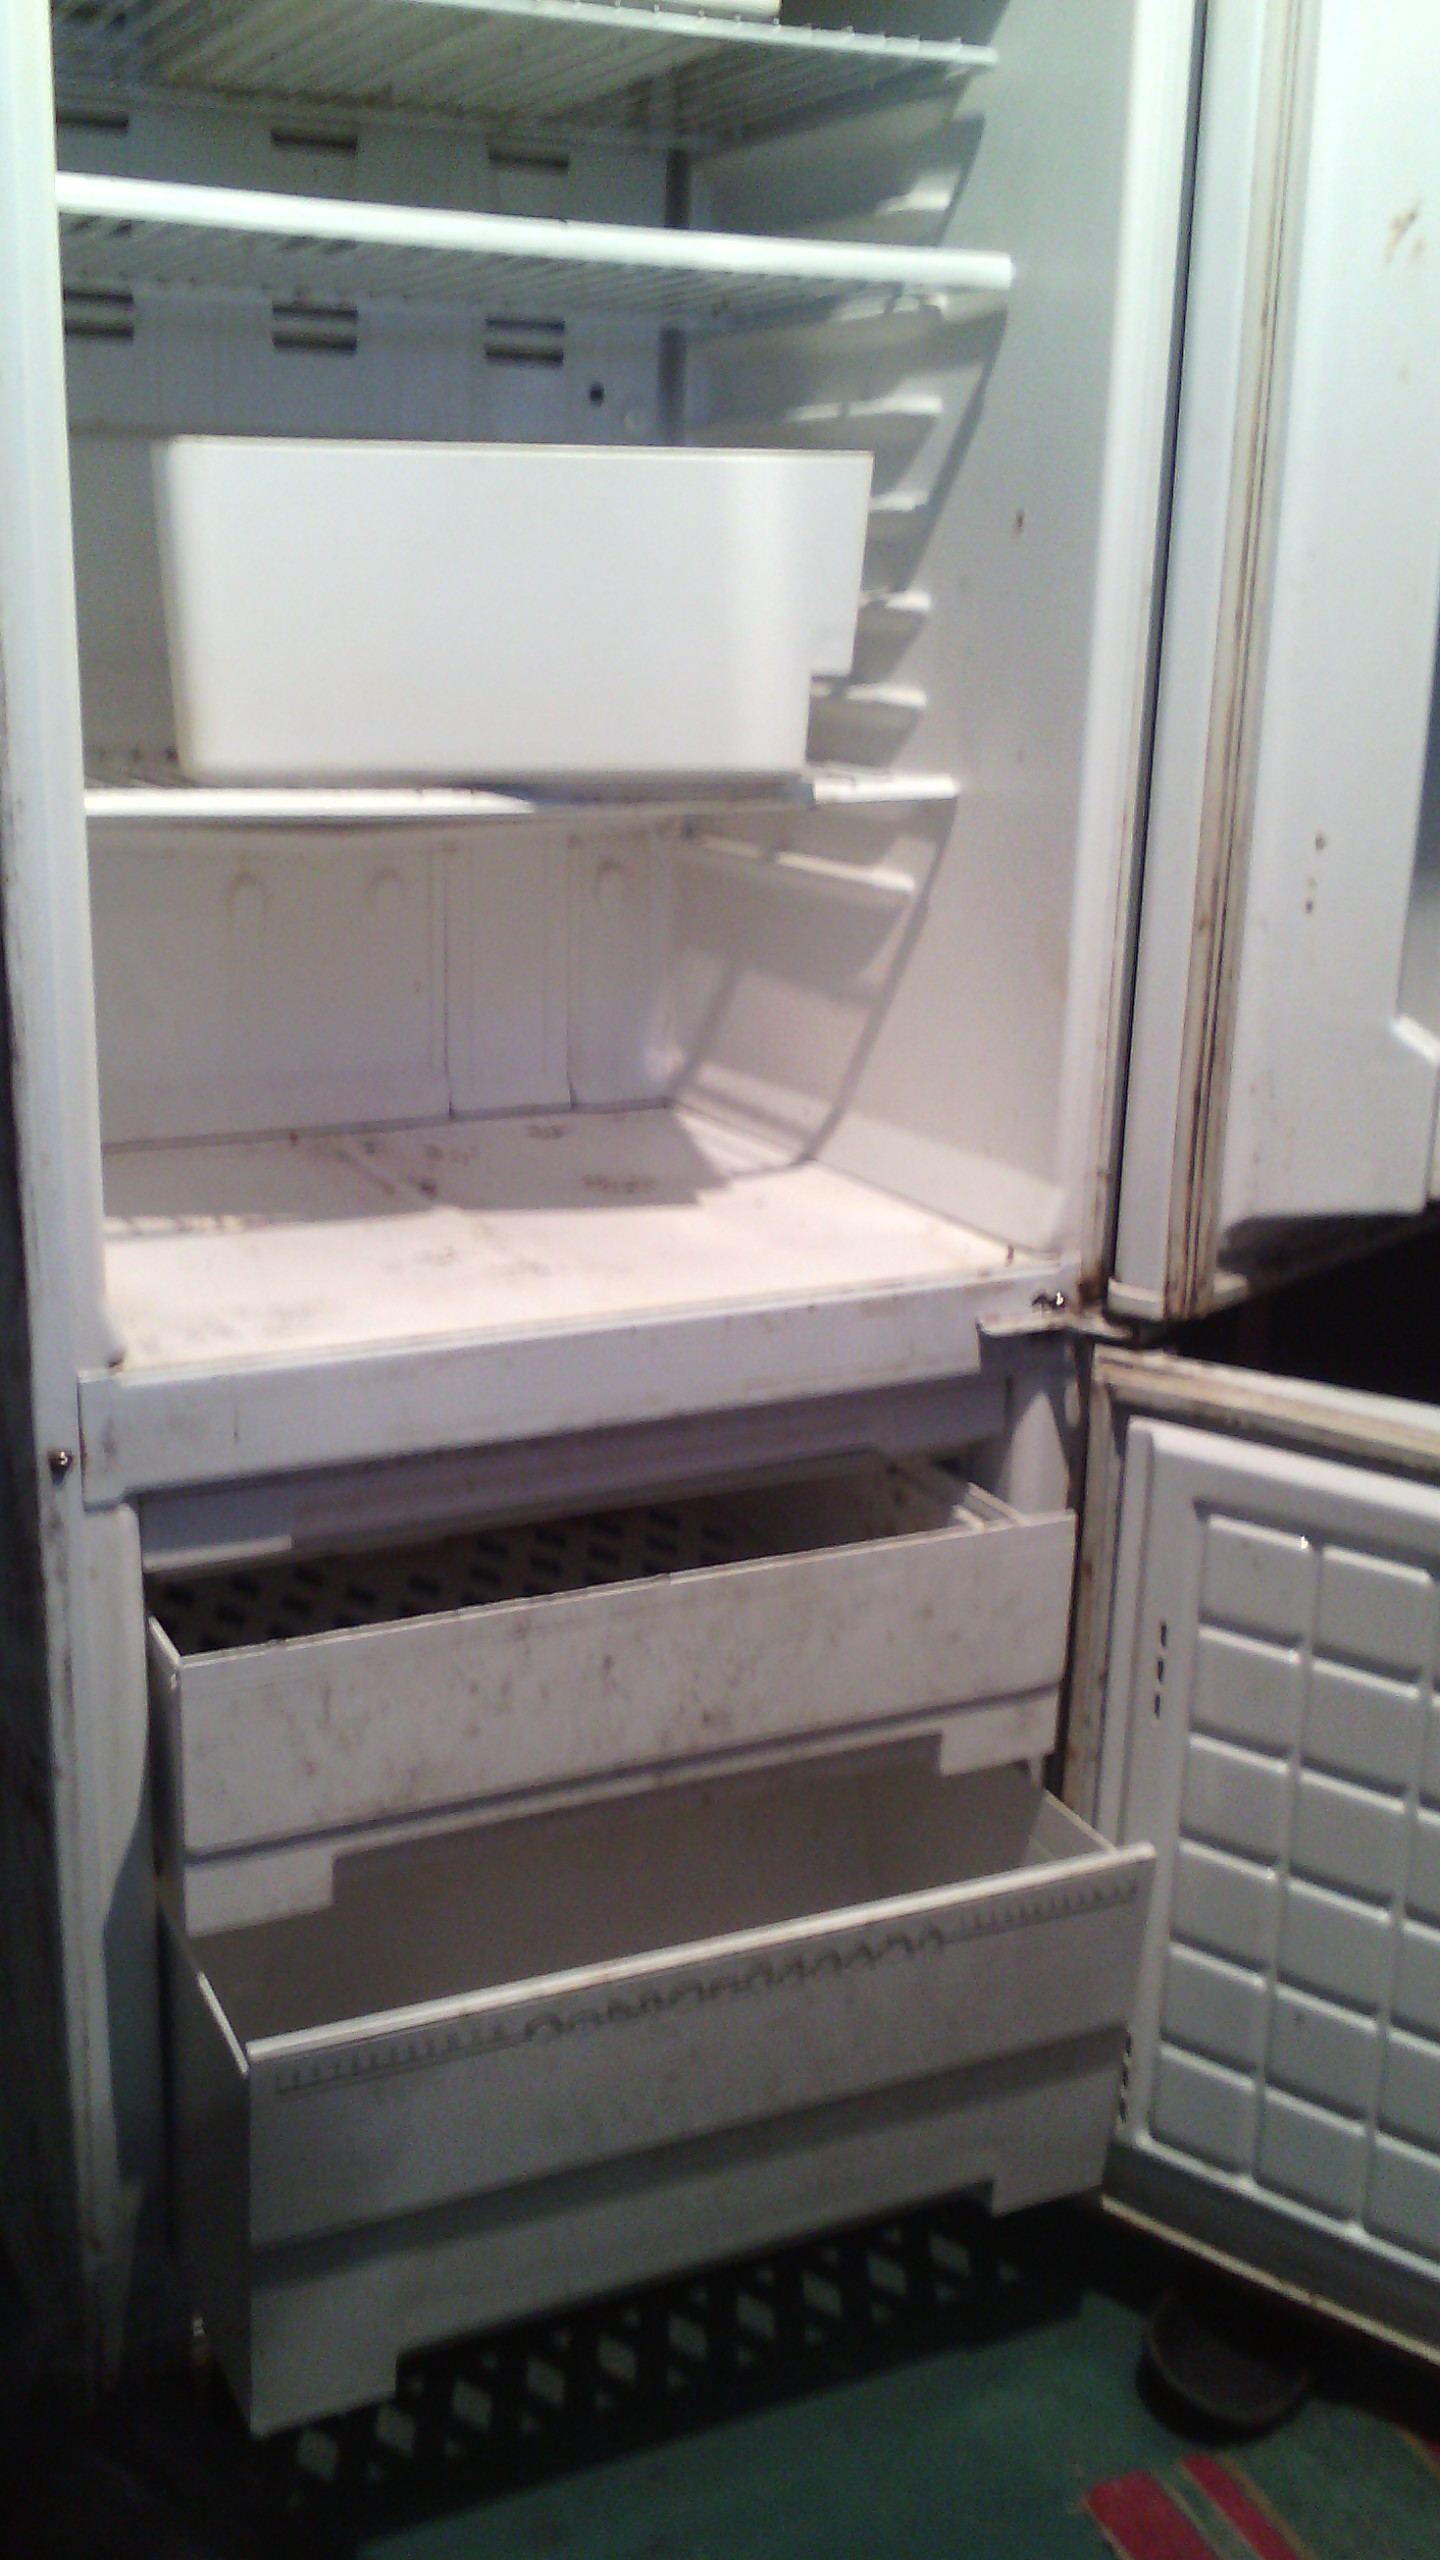 Морозилка снизу. Бирусю морозилка с низу. Холодильник Бирюса двухкамерный морозилка снизу. Холодильник бирюза двухкамерный нижняя морозилка. Холодильник Бирюса с морозилкой внизу.